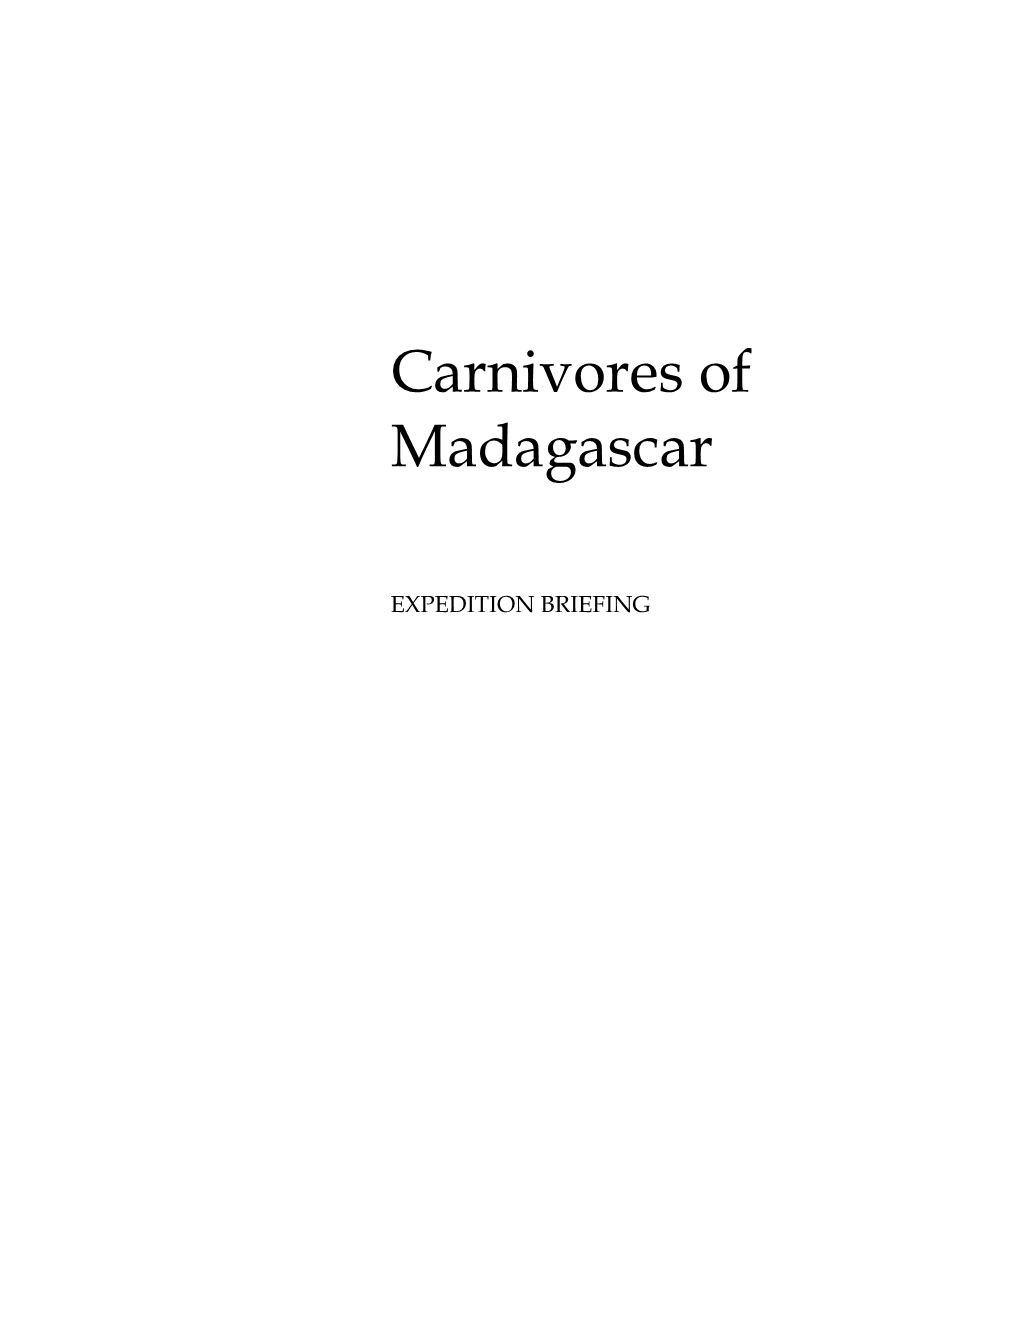 Carnivores of Madagascar